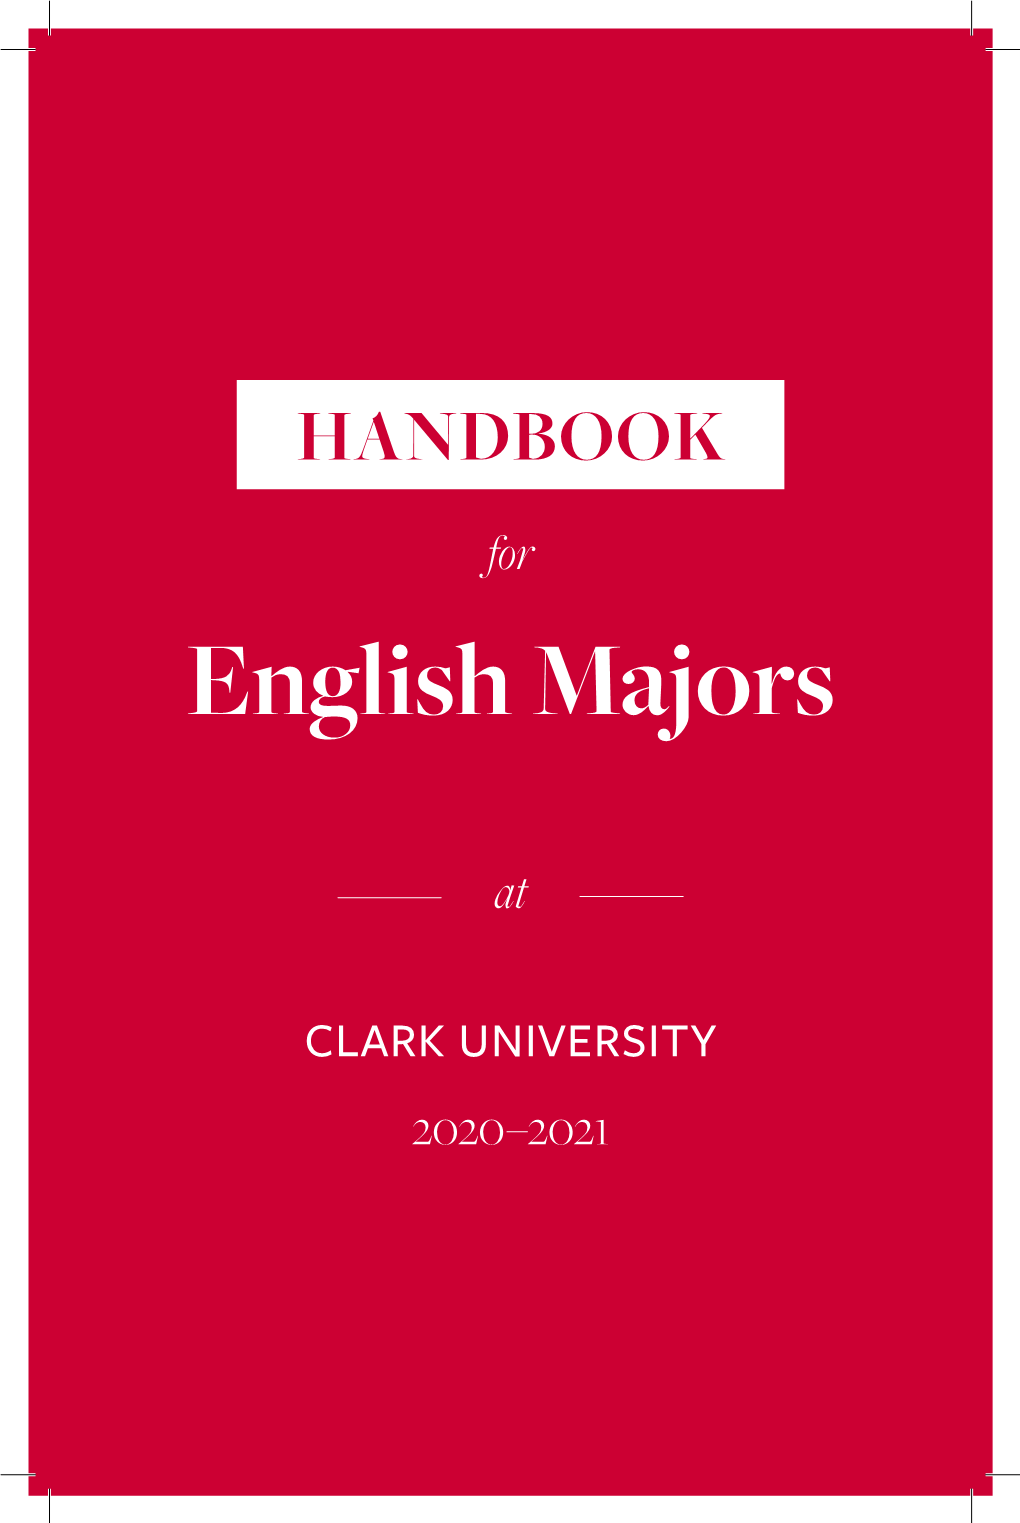 English Handbok